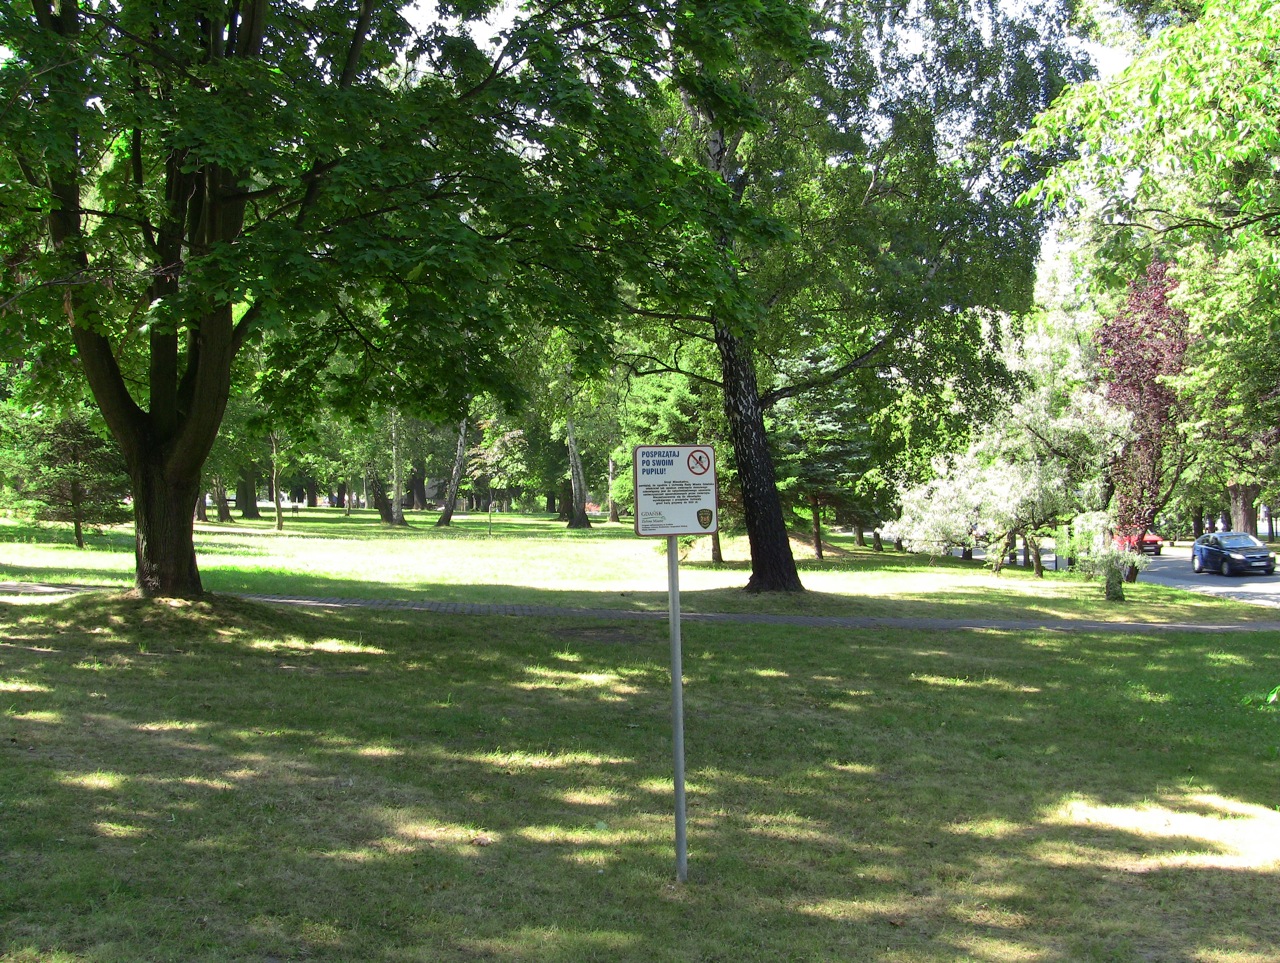 Zielony Park